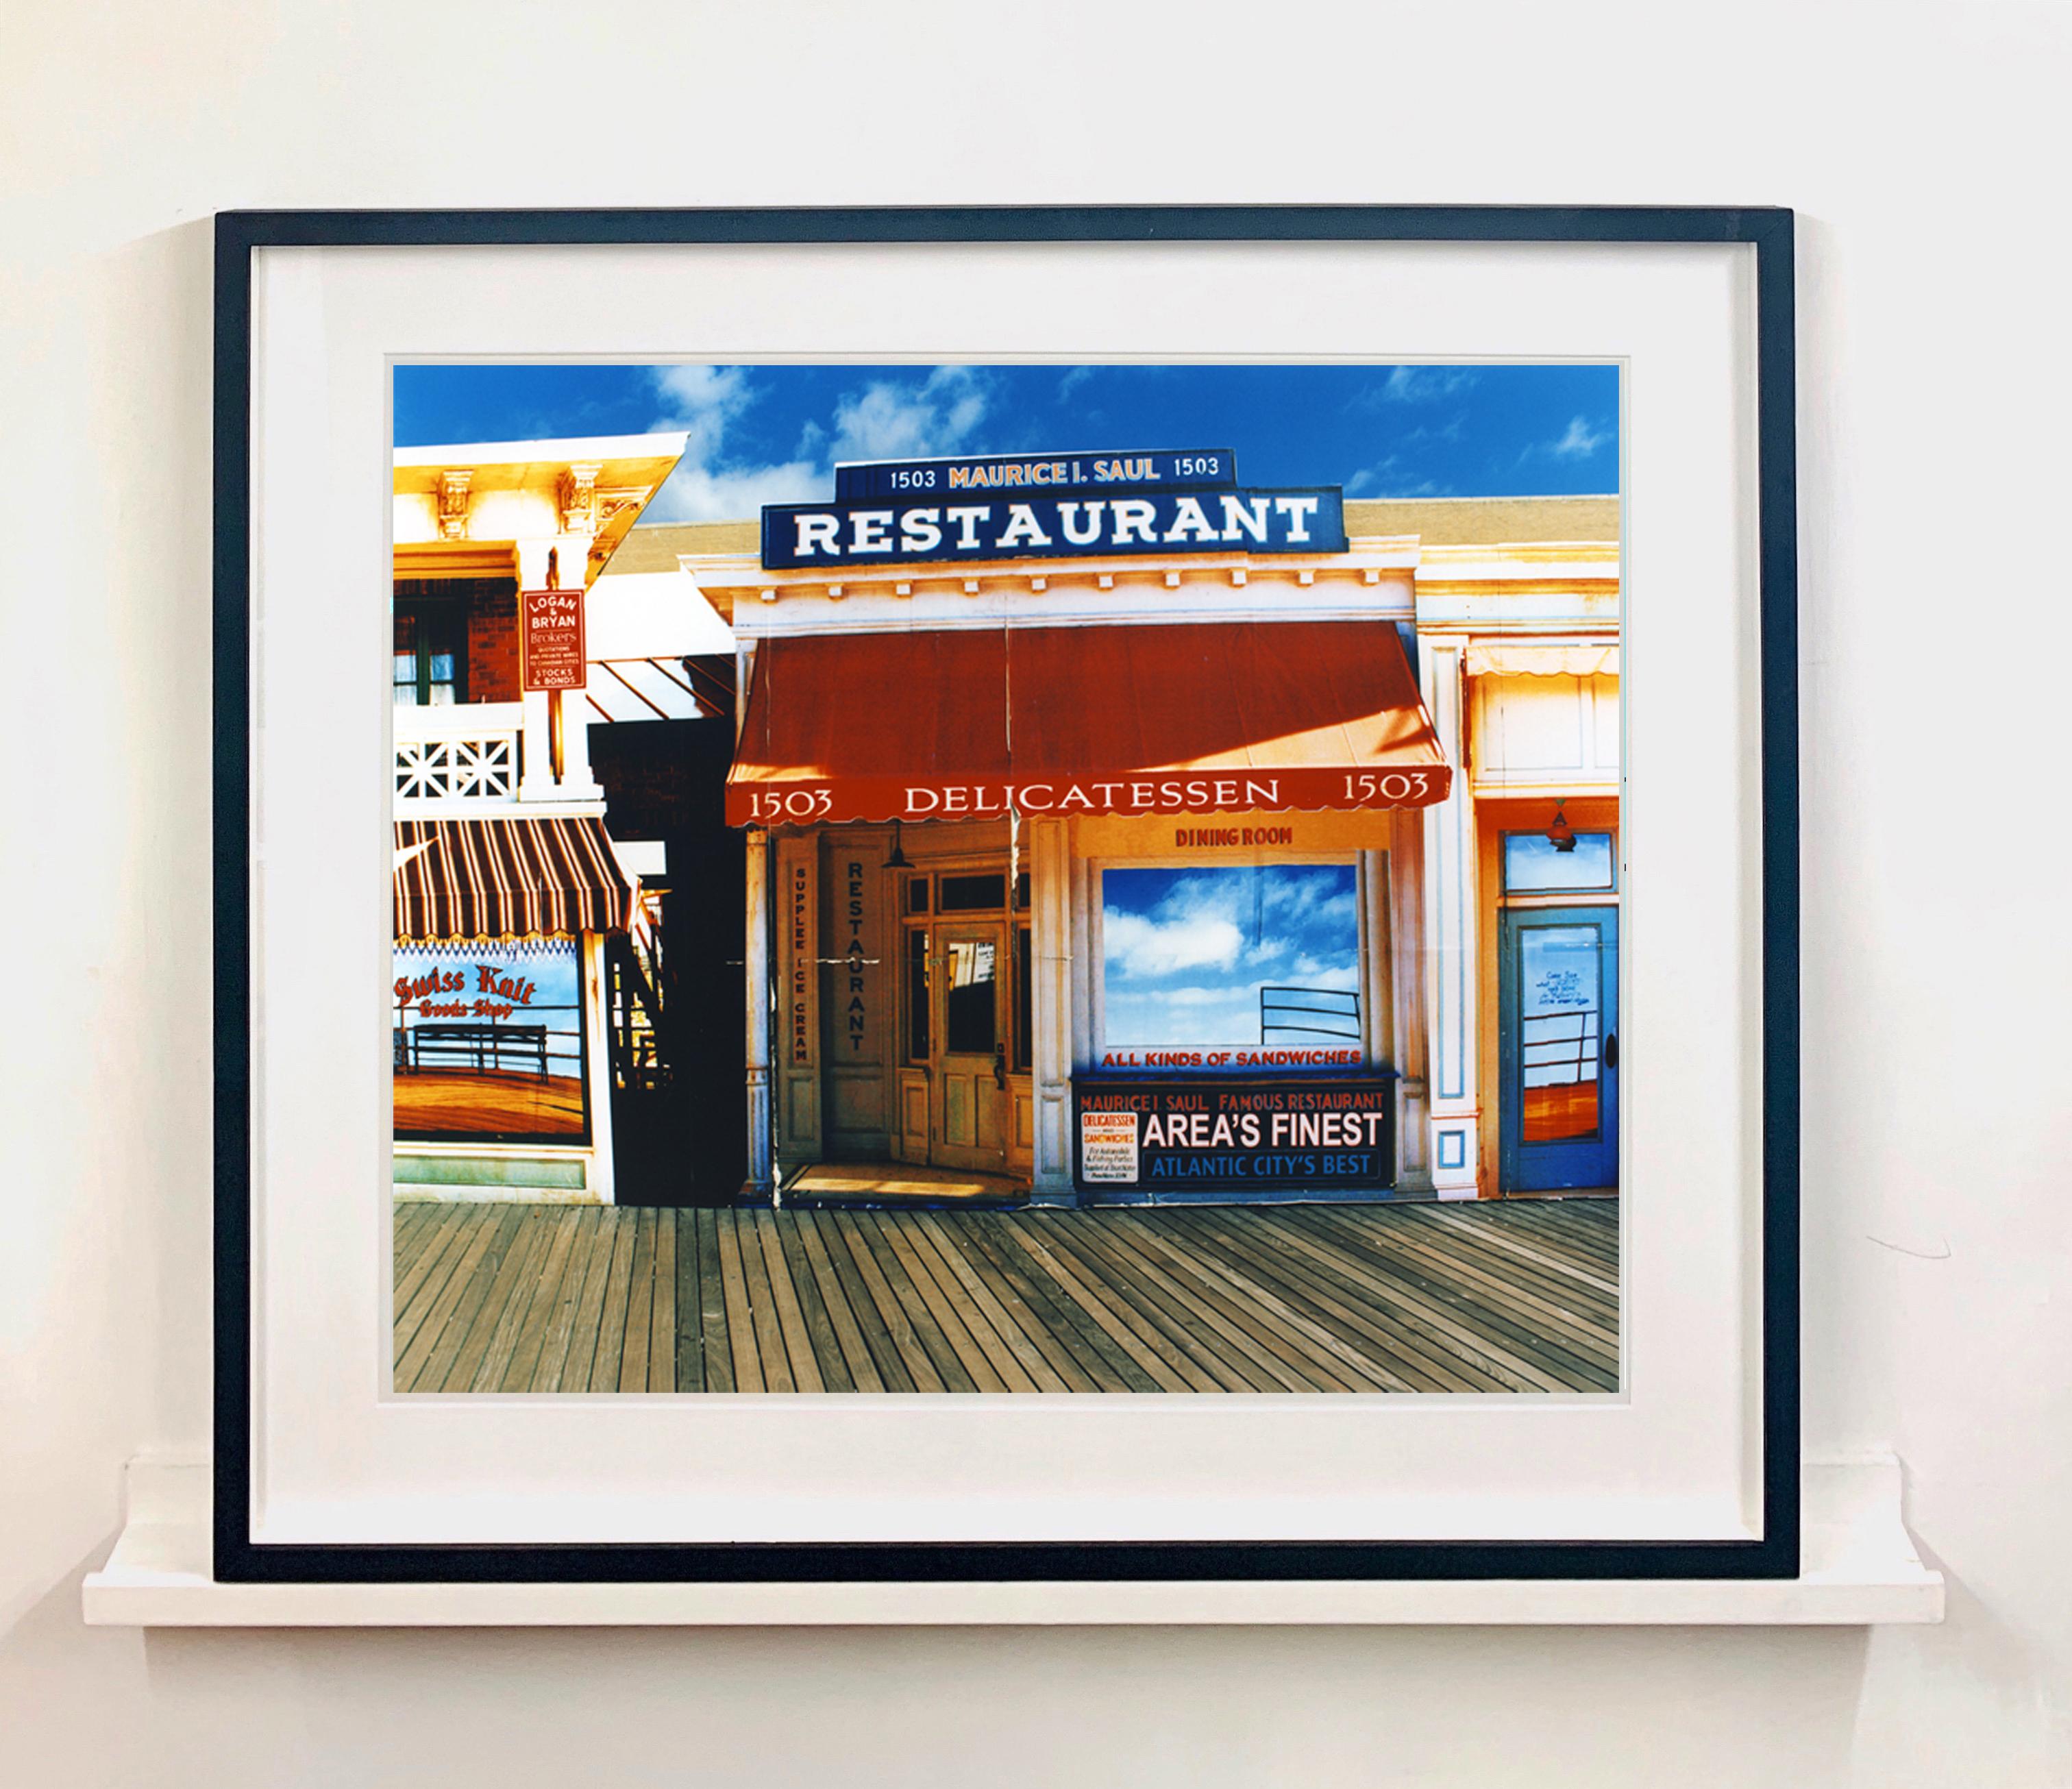 Delicatessen in the Sun, Atlantic City, New Jersey – amerikanische Farbfotografie (Pop-Art), Photograph, von Richard Heeps